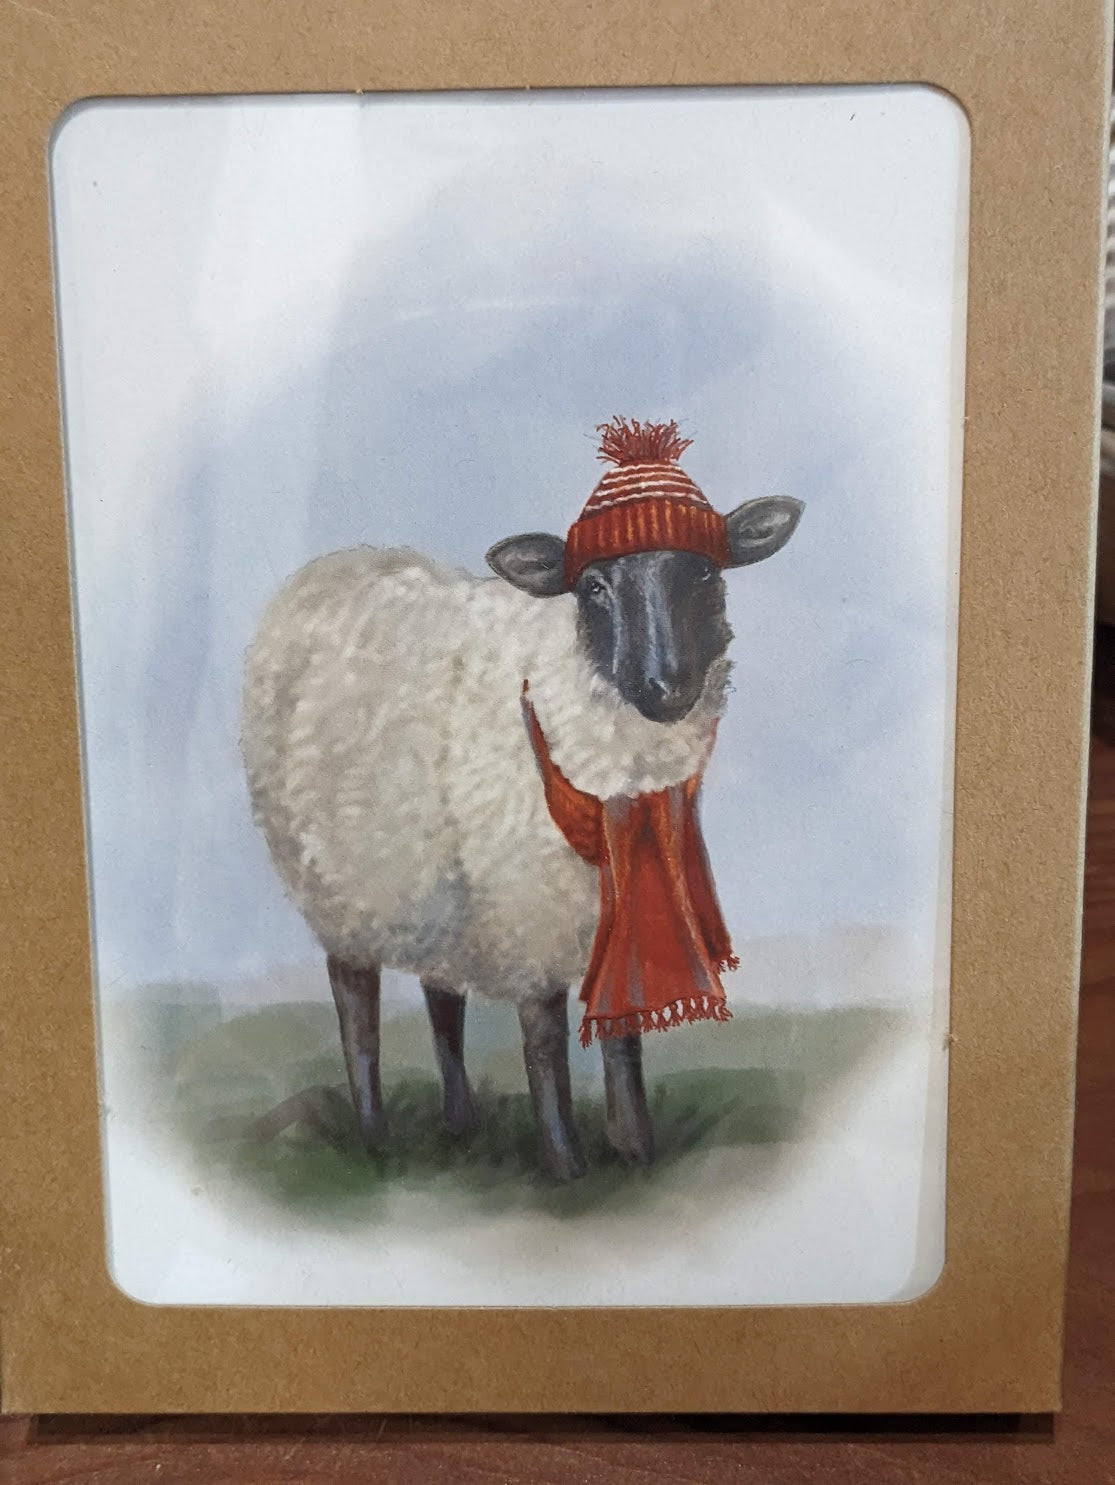 Sheep Card Set by Mandy Troxel